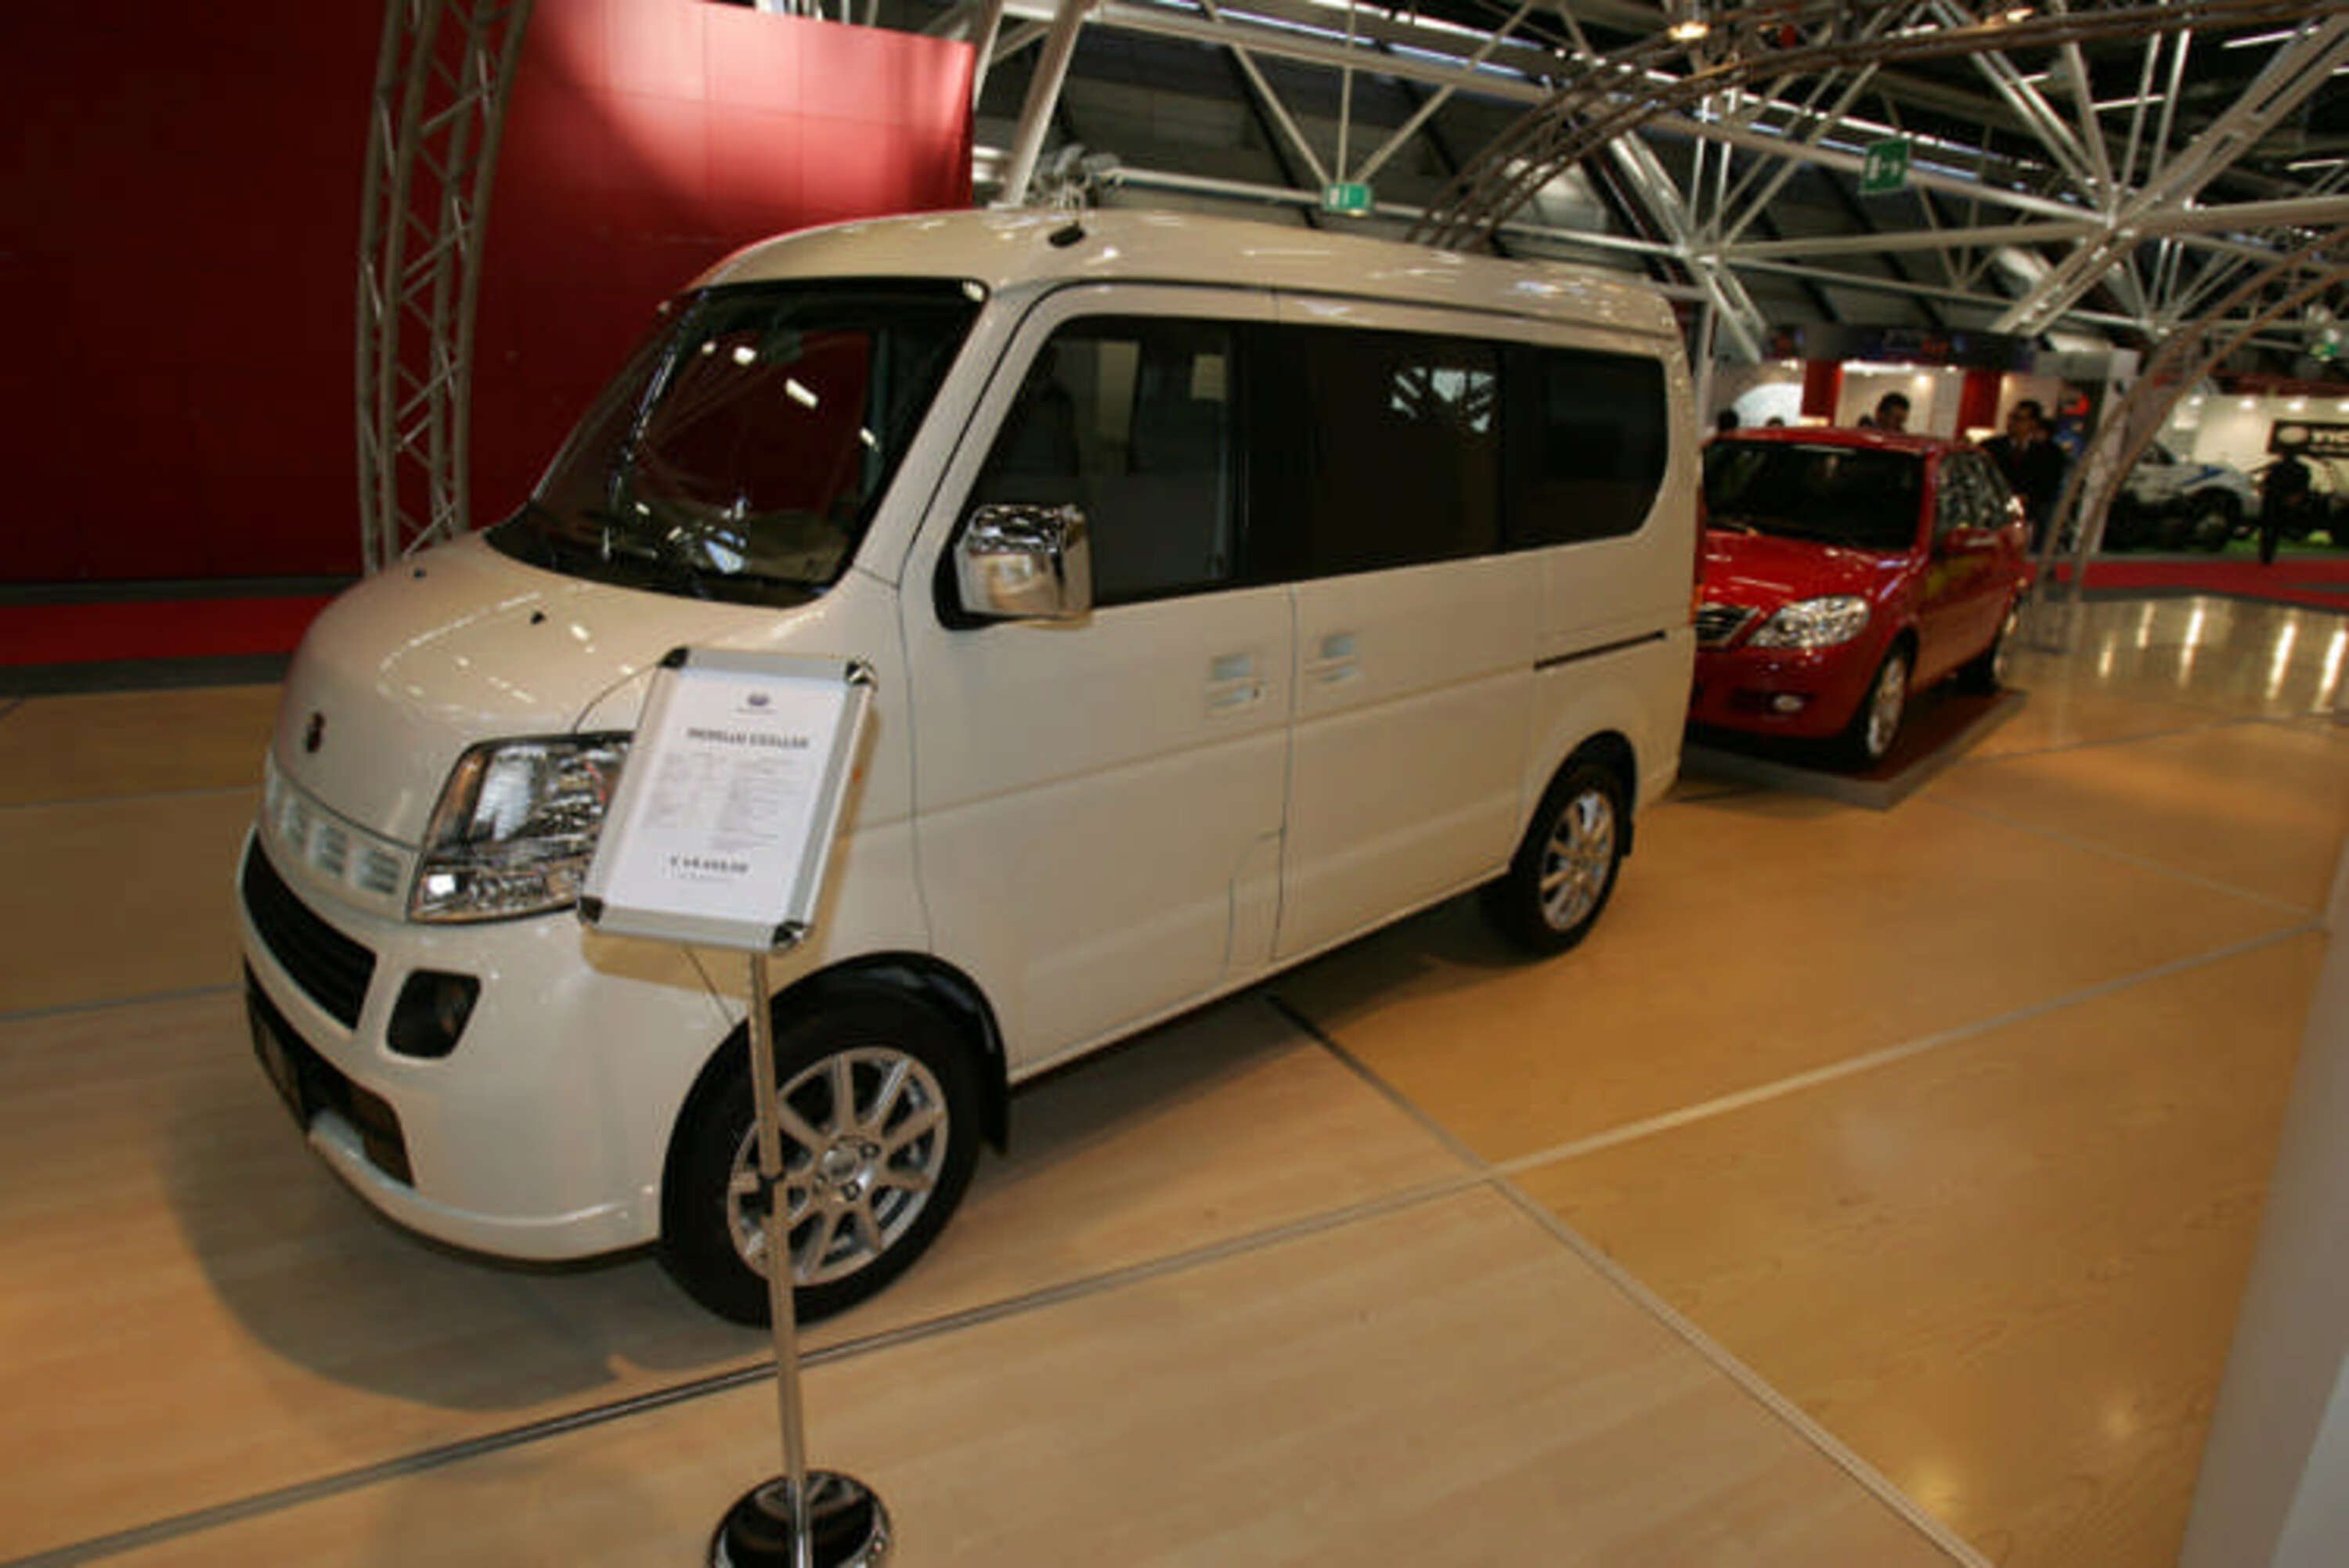 Martin Motors Freedom Cab Furgone (2009-16)